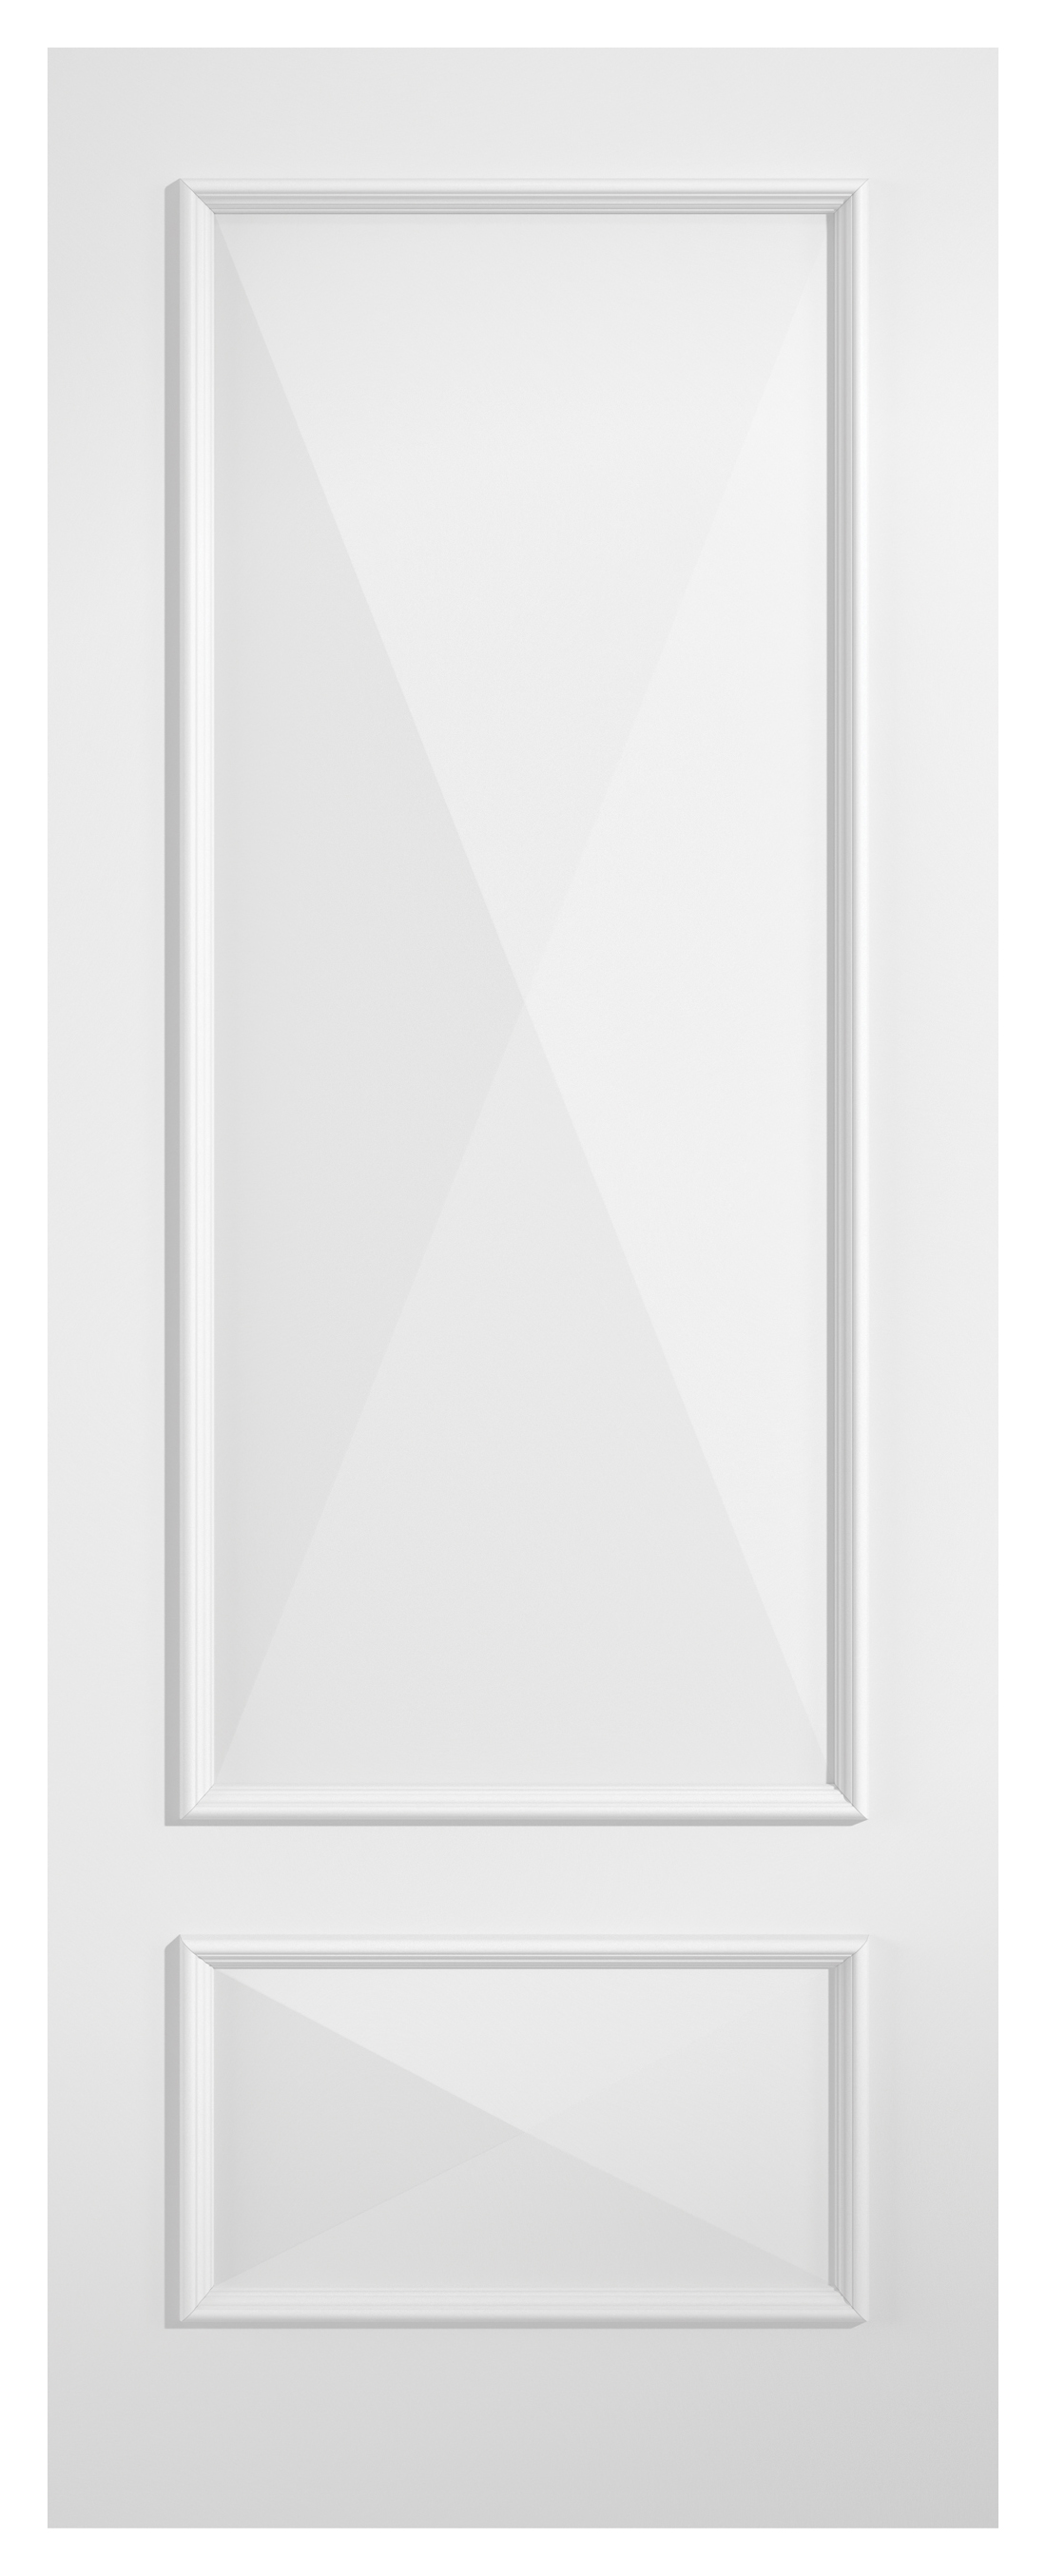 Image of LPD Internal Knightsbridge 2 Panel Primed Plus White FD30 Fire Door - 762 x 1981mm